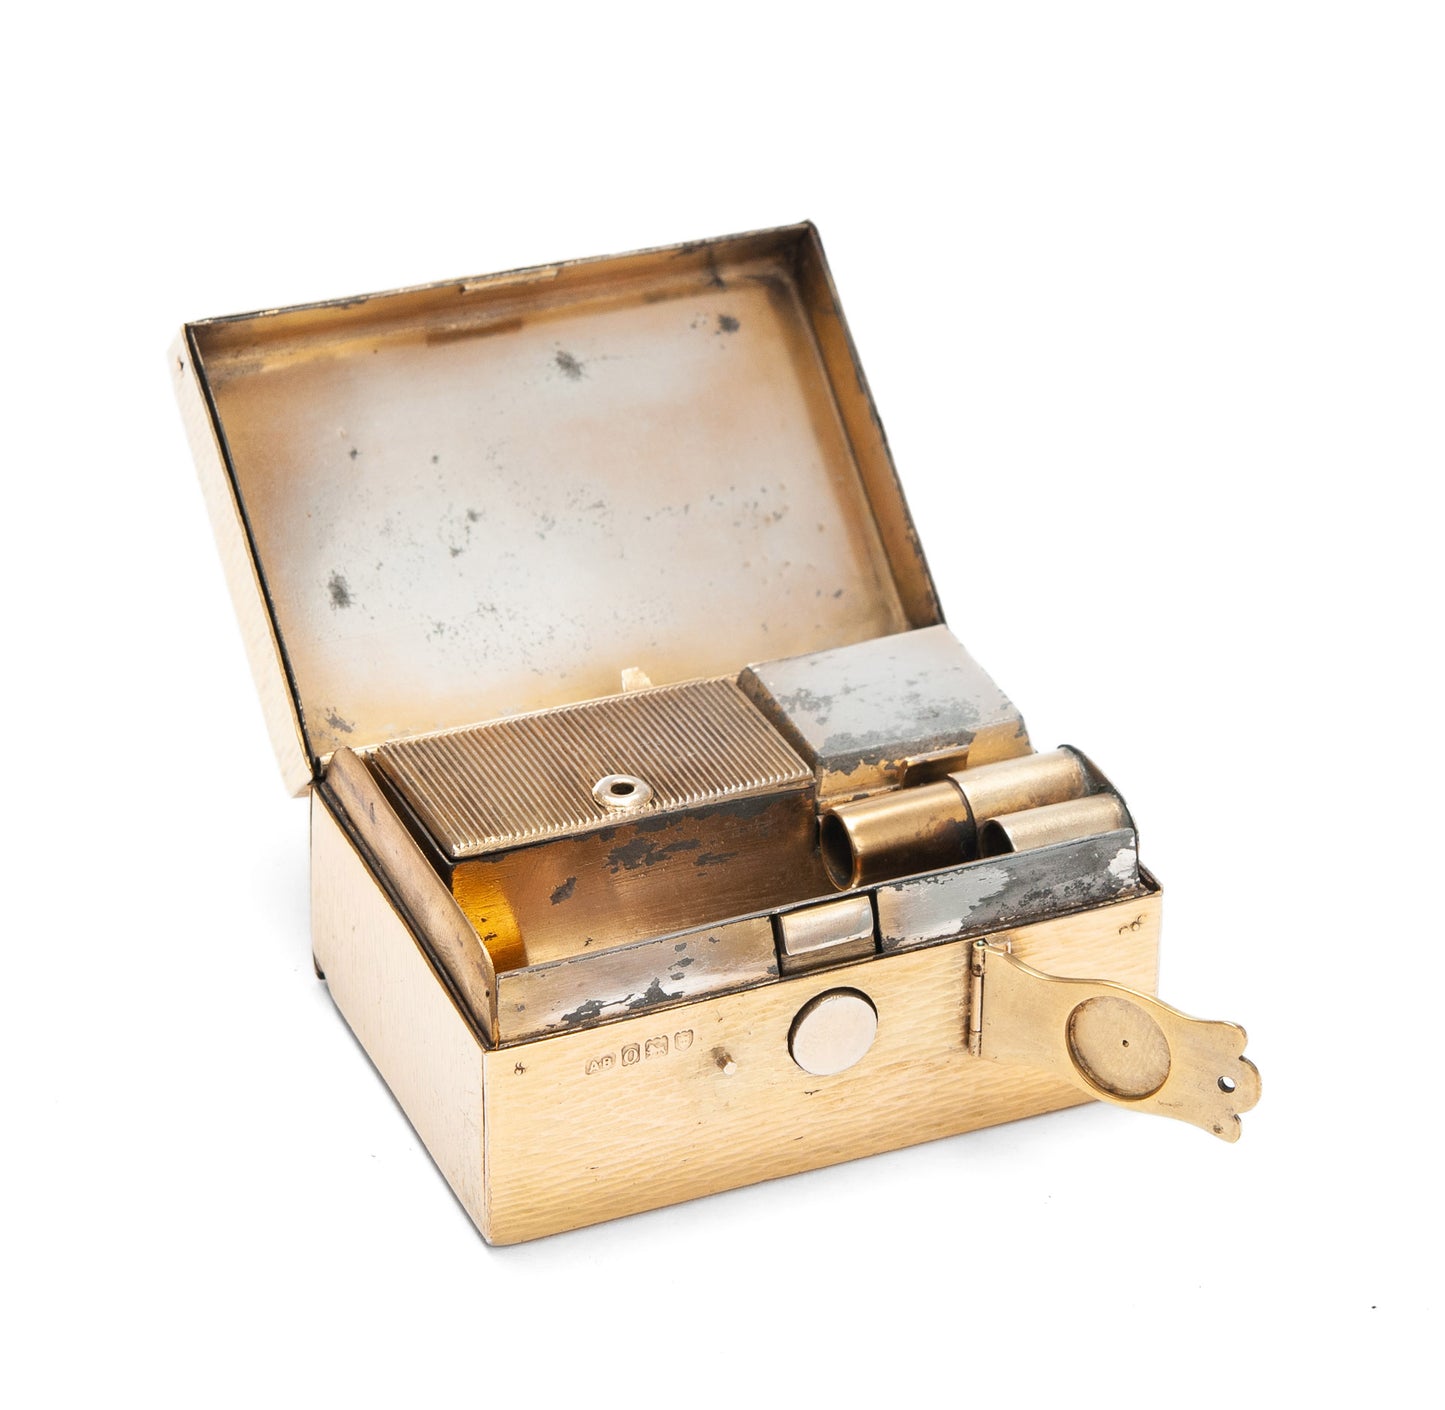 Antique Edwardian Sterling Silver Gilt Cased Travelling Desk Compendium/Inkwell (Code 9927)